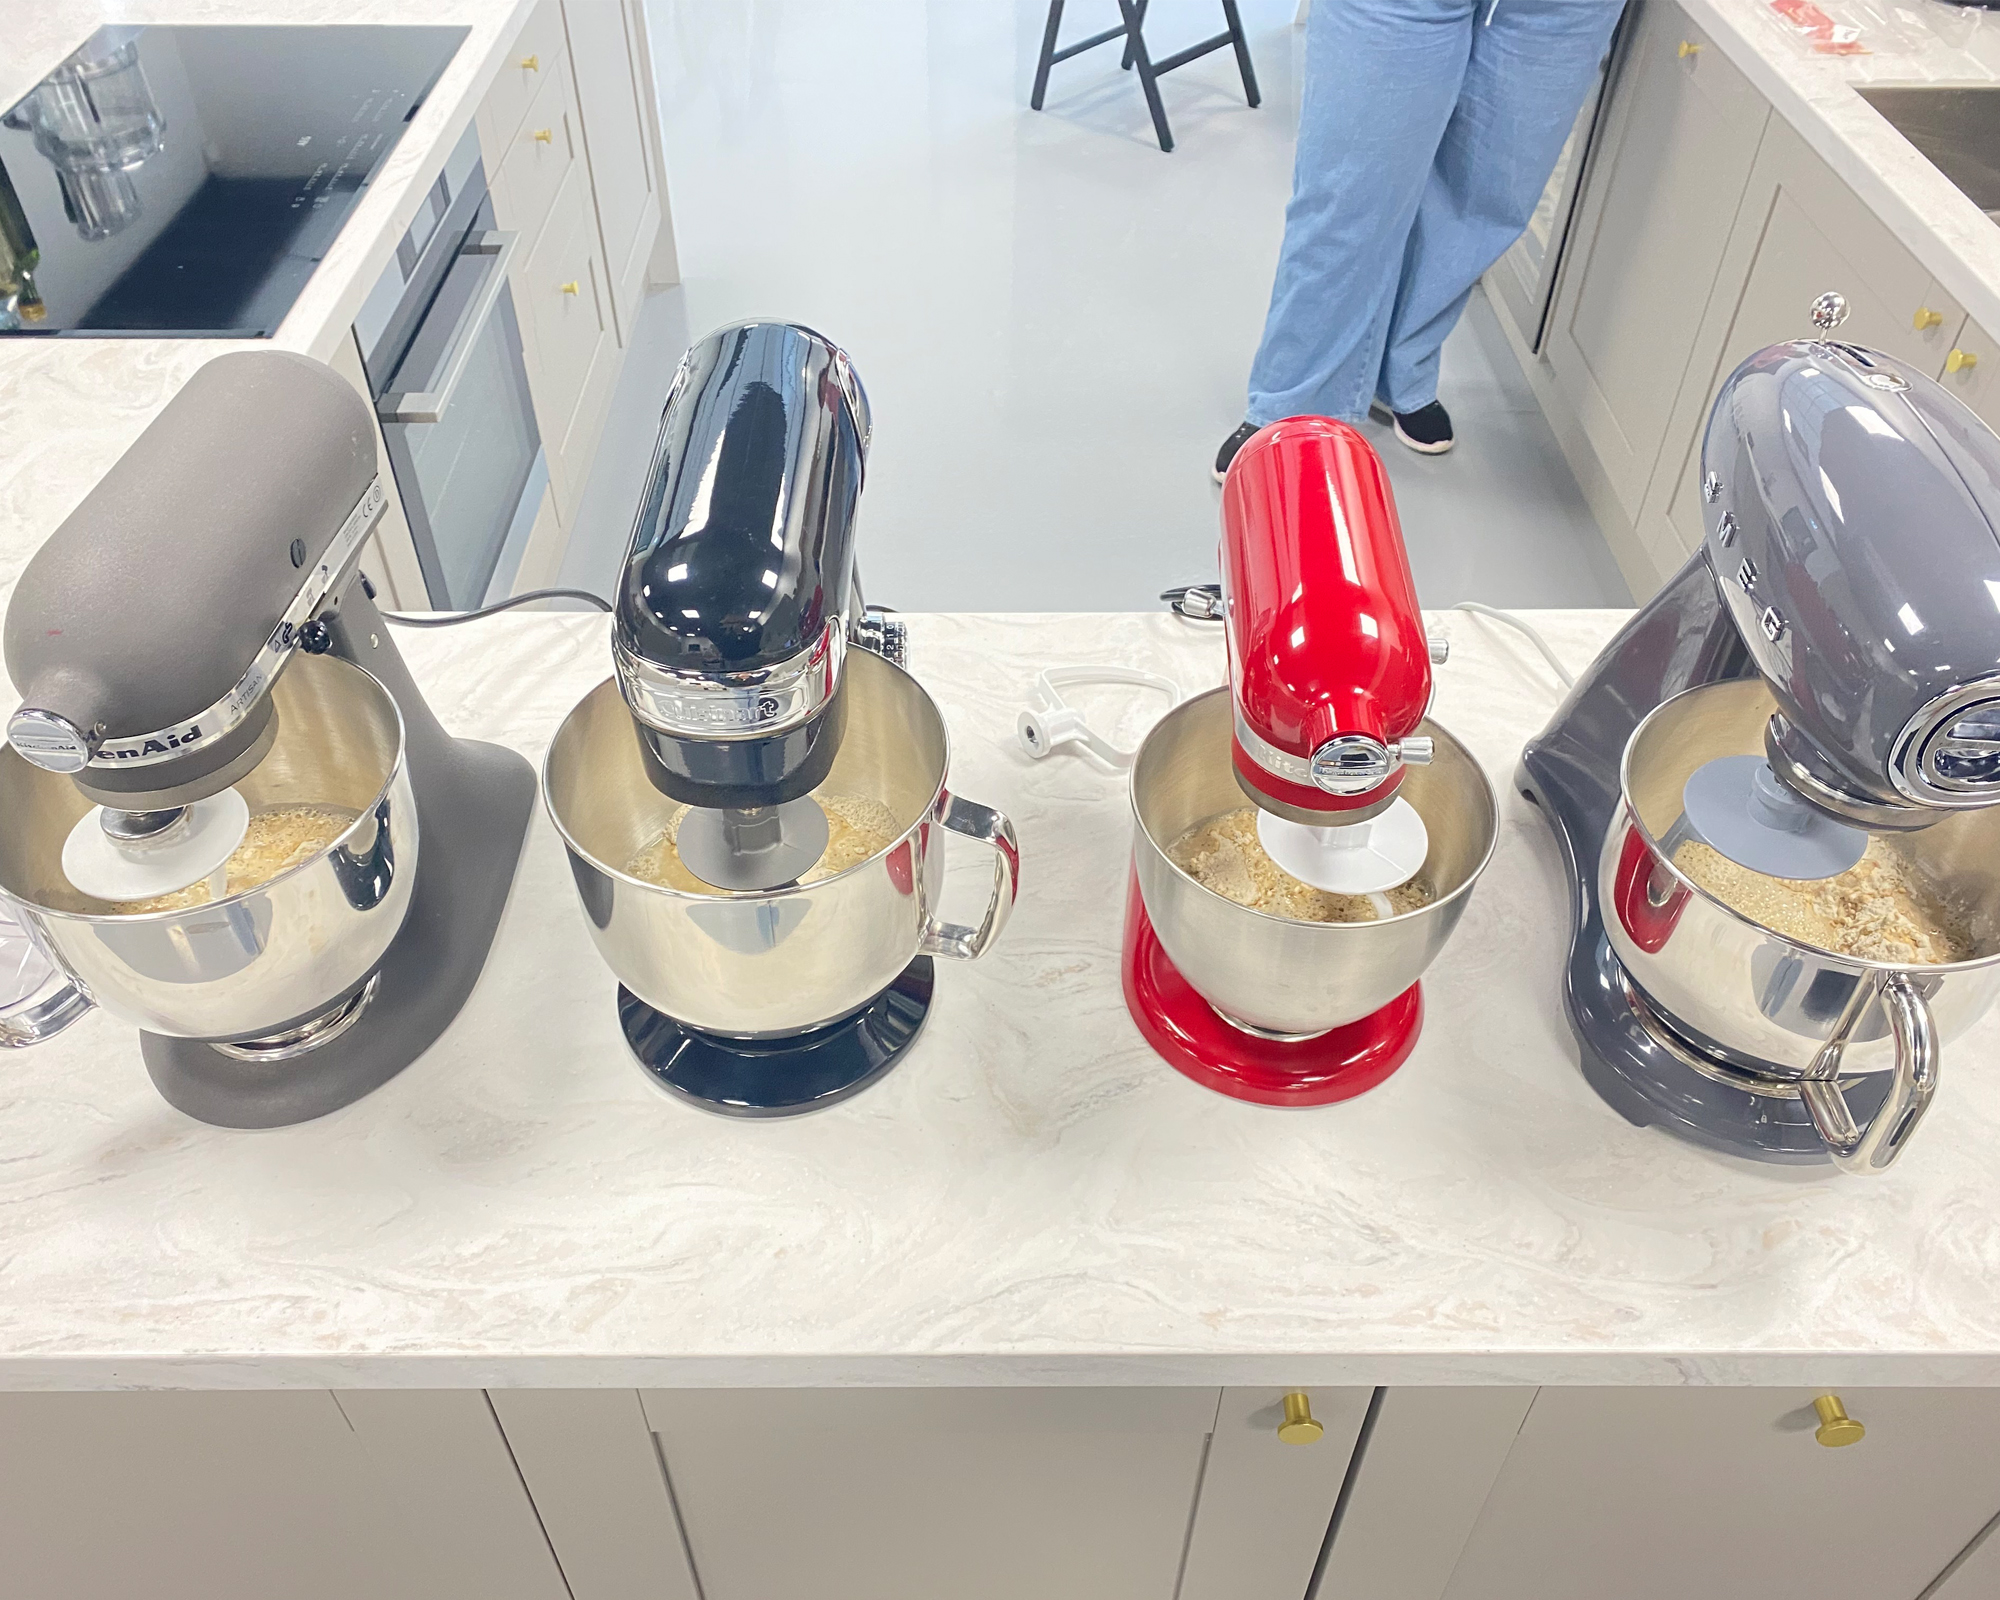 A KitchenAid Artisan, KitchenAid Mini, Cuisinart Precision, and Smeg stand mixers being tested